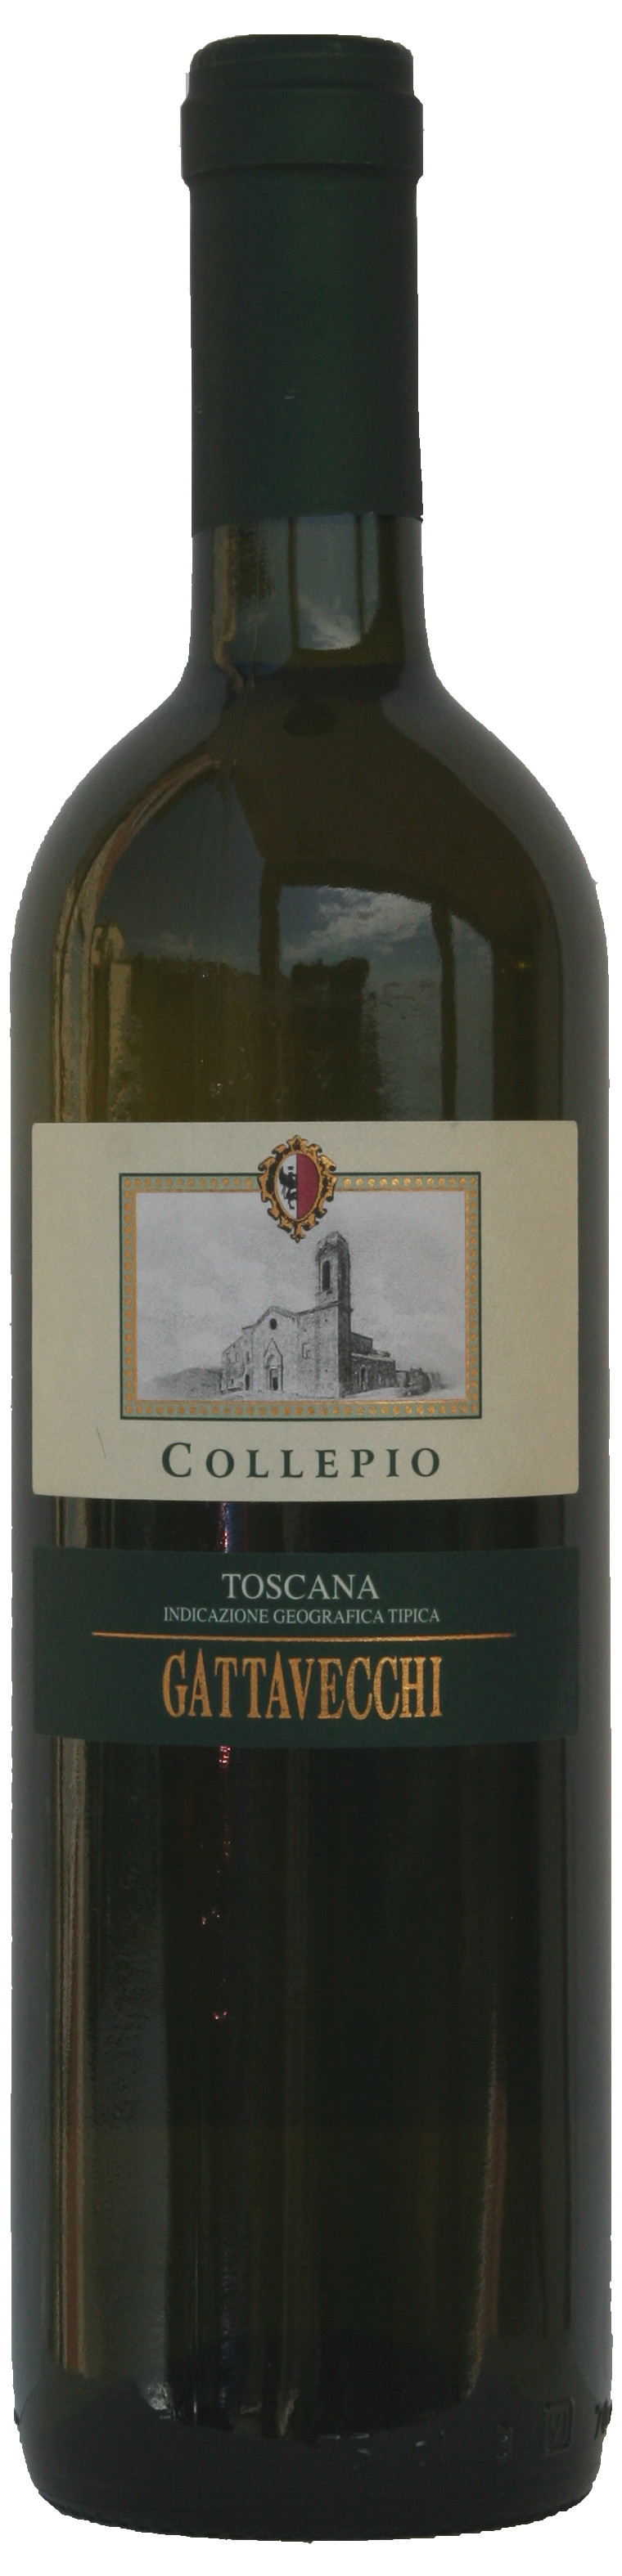 Toscana IGT white wines